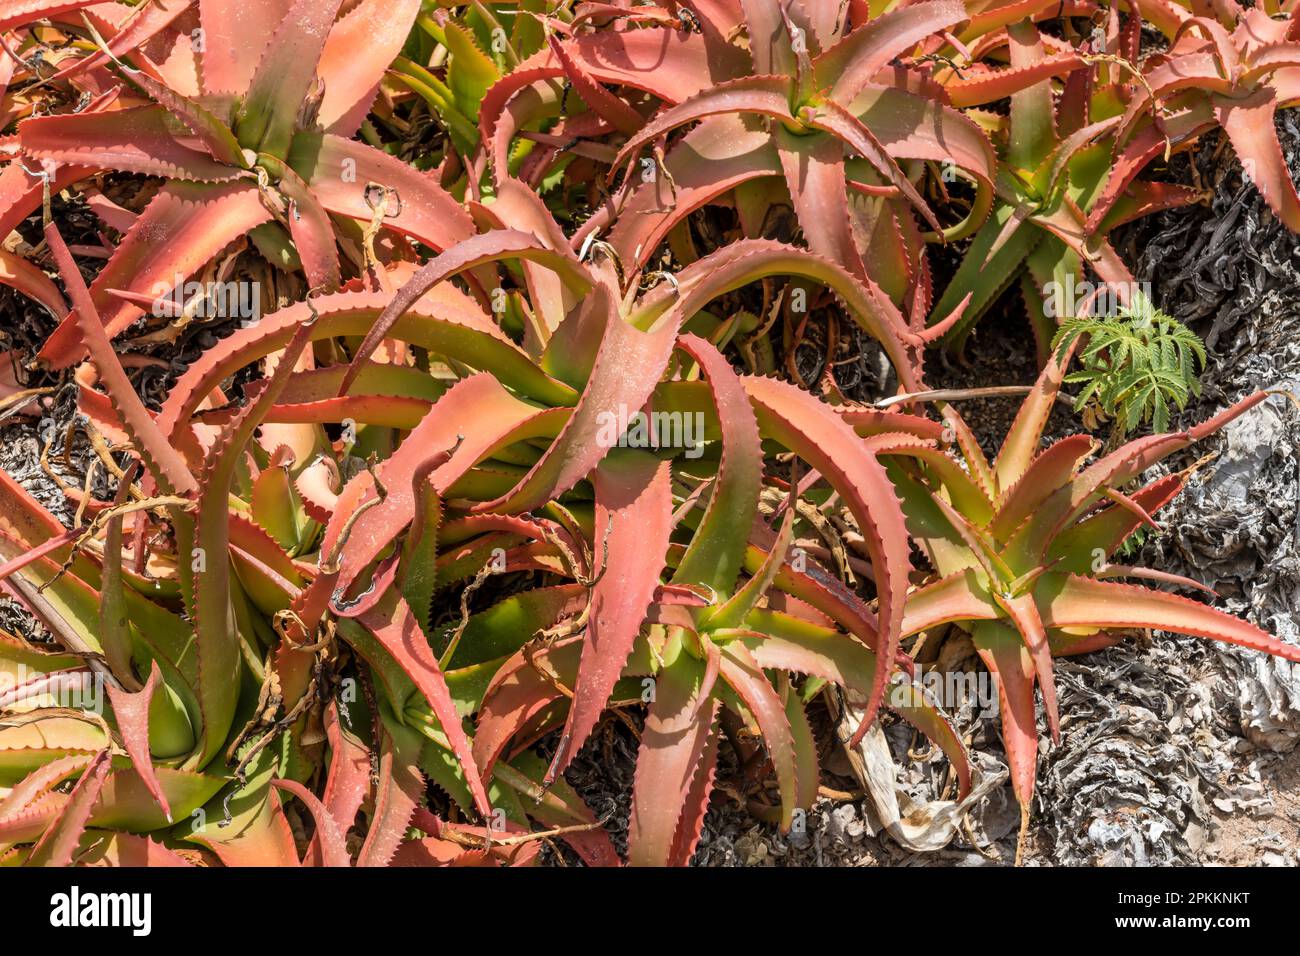 detail of Van Balen Aloe plants, shot at botanic garden in bright summer light, Worcester, Western Cape, South Africa Stock Photo